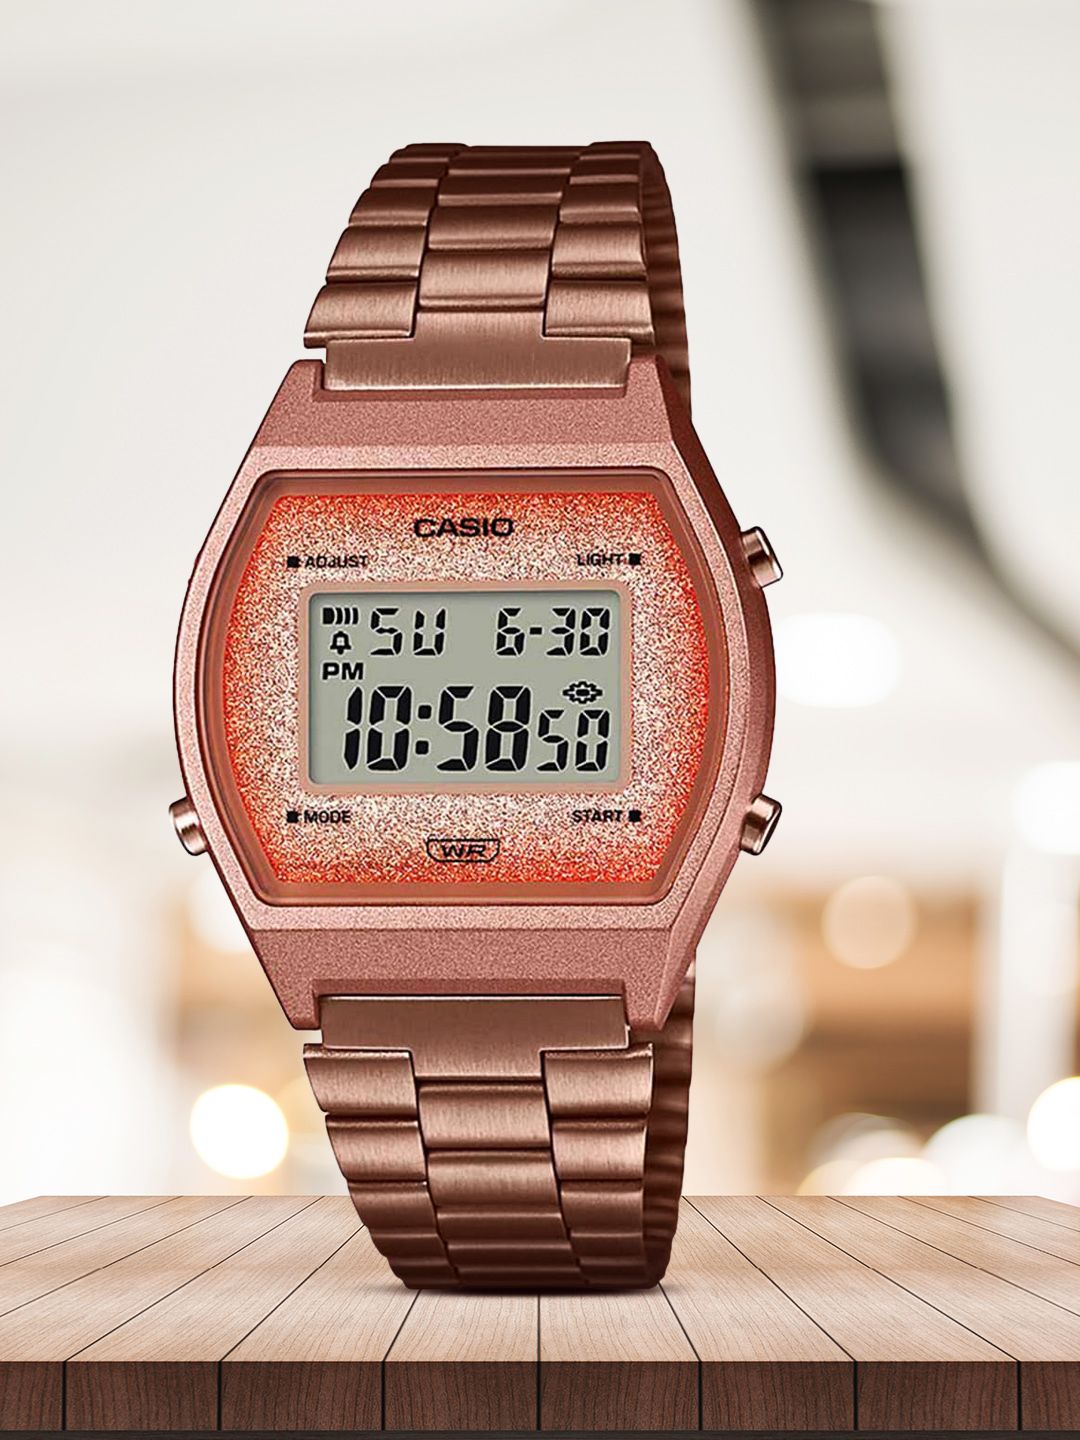 CASIO Unisex Rosegold-Toned Digital Watch D187 Price in India